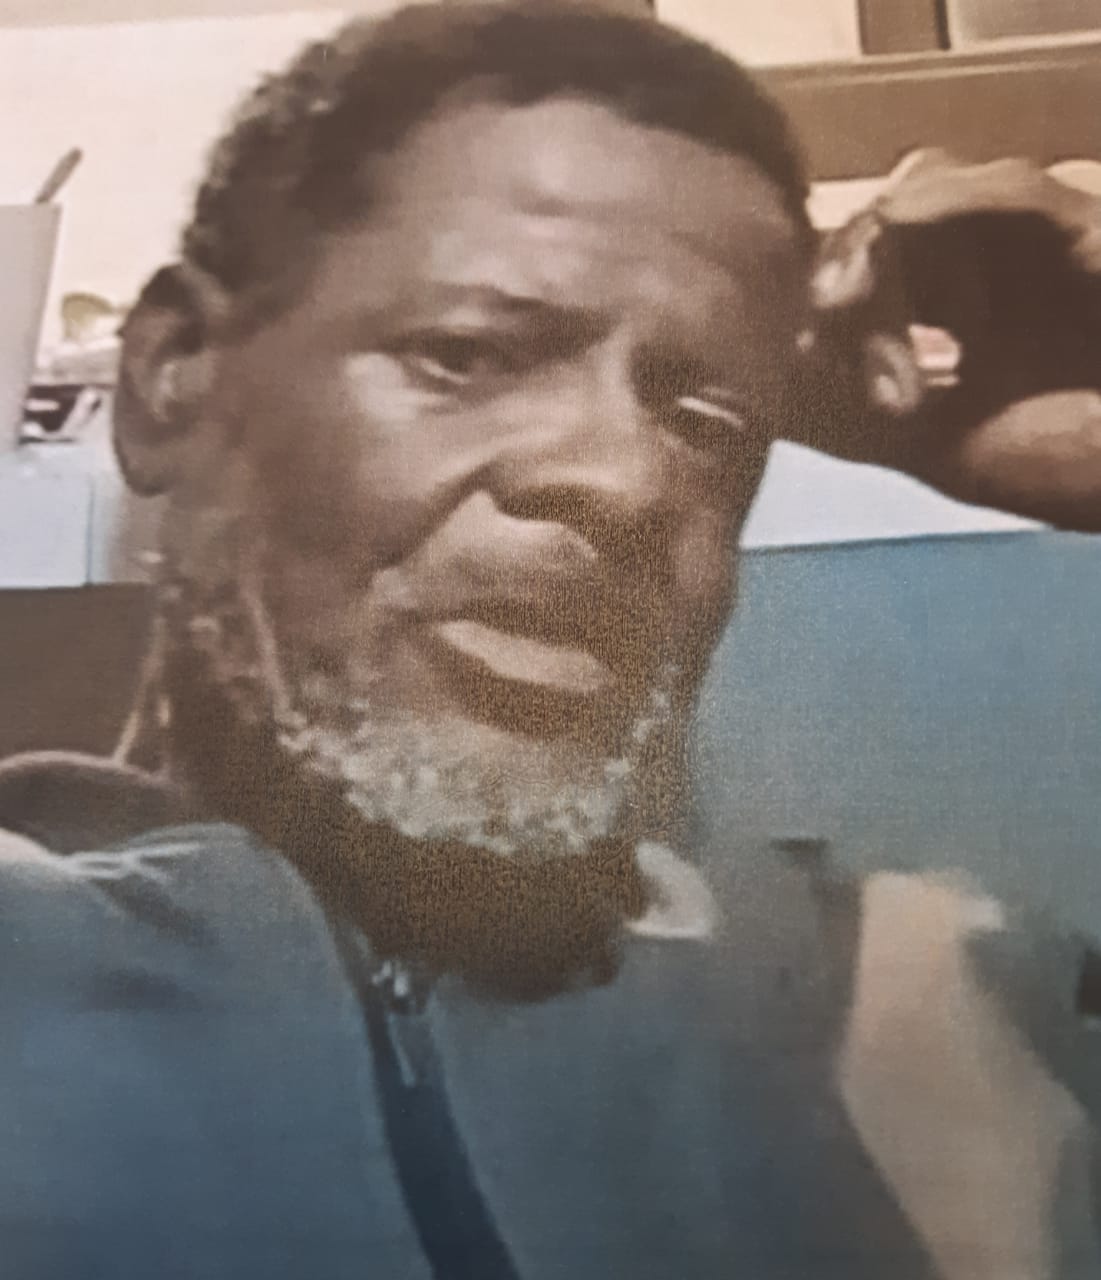 Police seek a missing person from Kwazakele